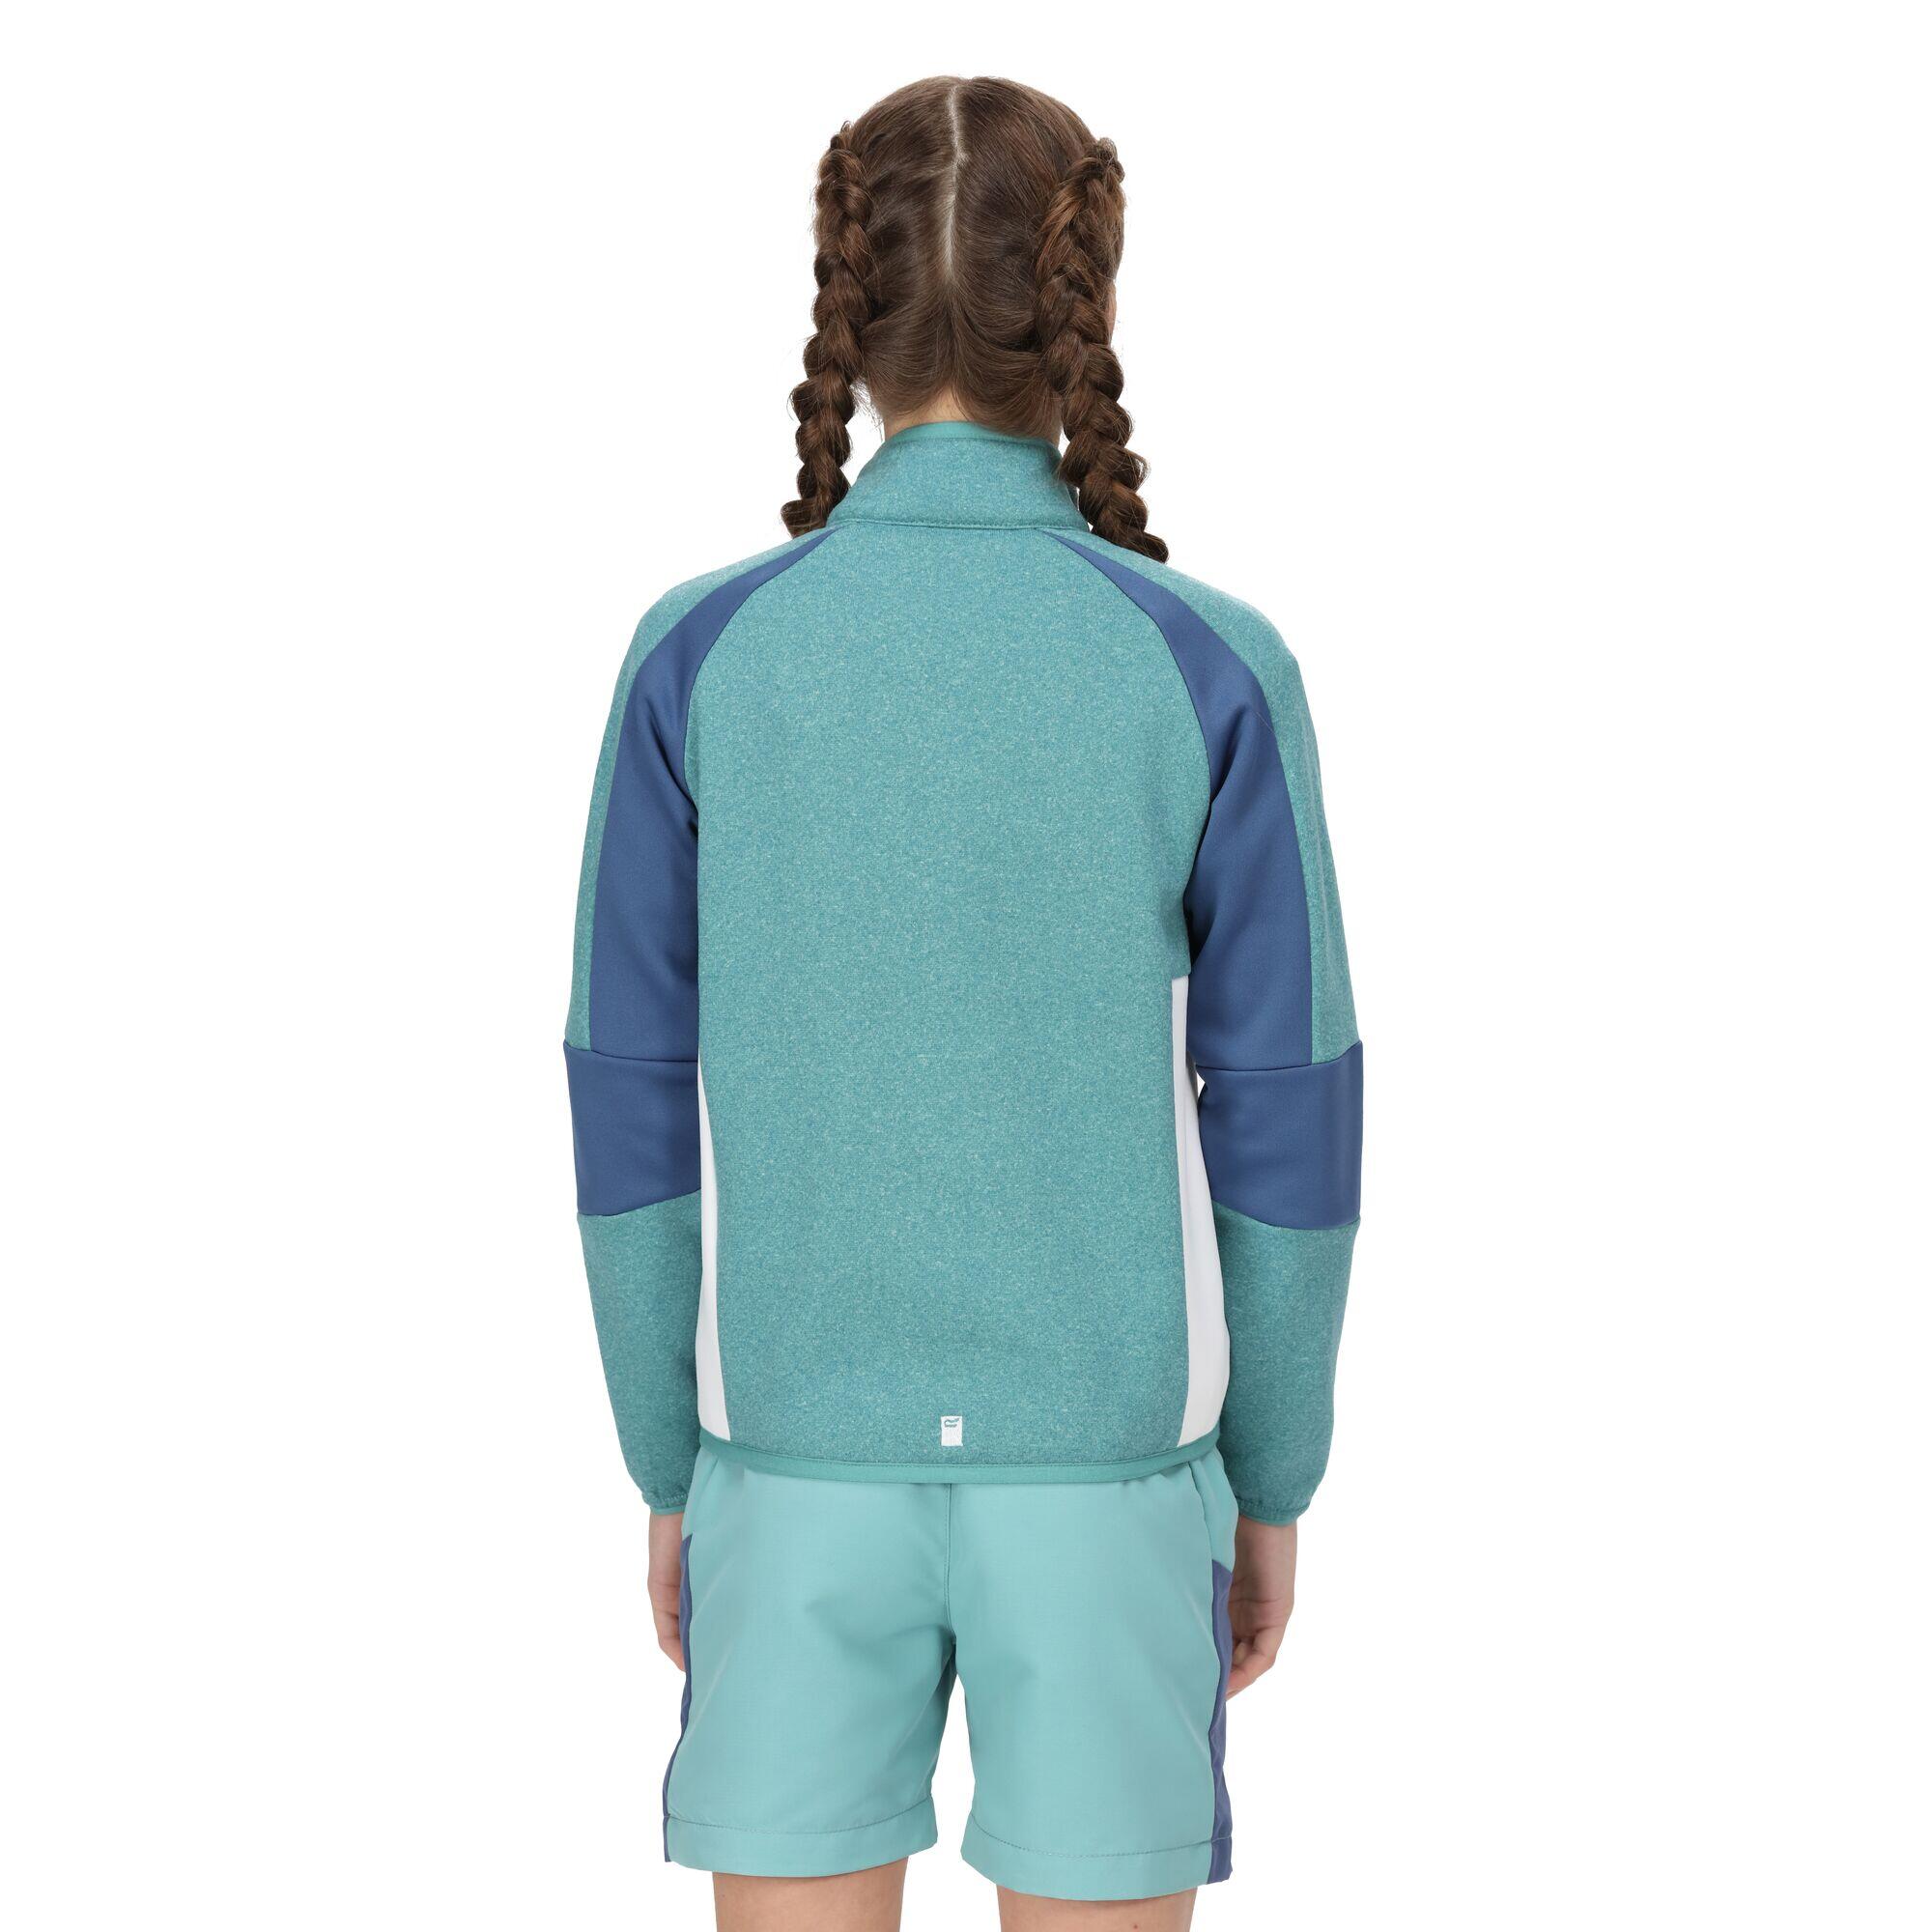 Childrens/Kids Oberon VII Marl Full Zip Fleece Jacket (Bristol Blue/Dusty Denim) 4/5